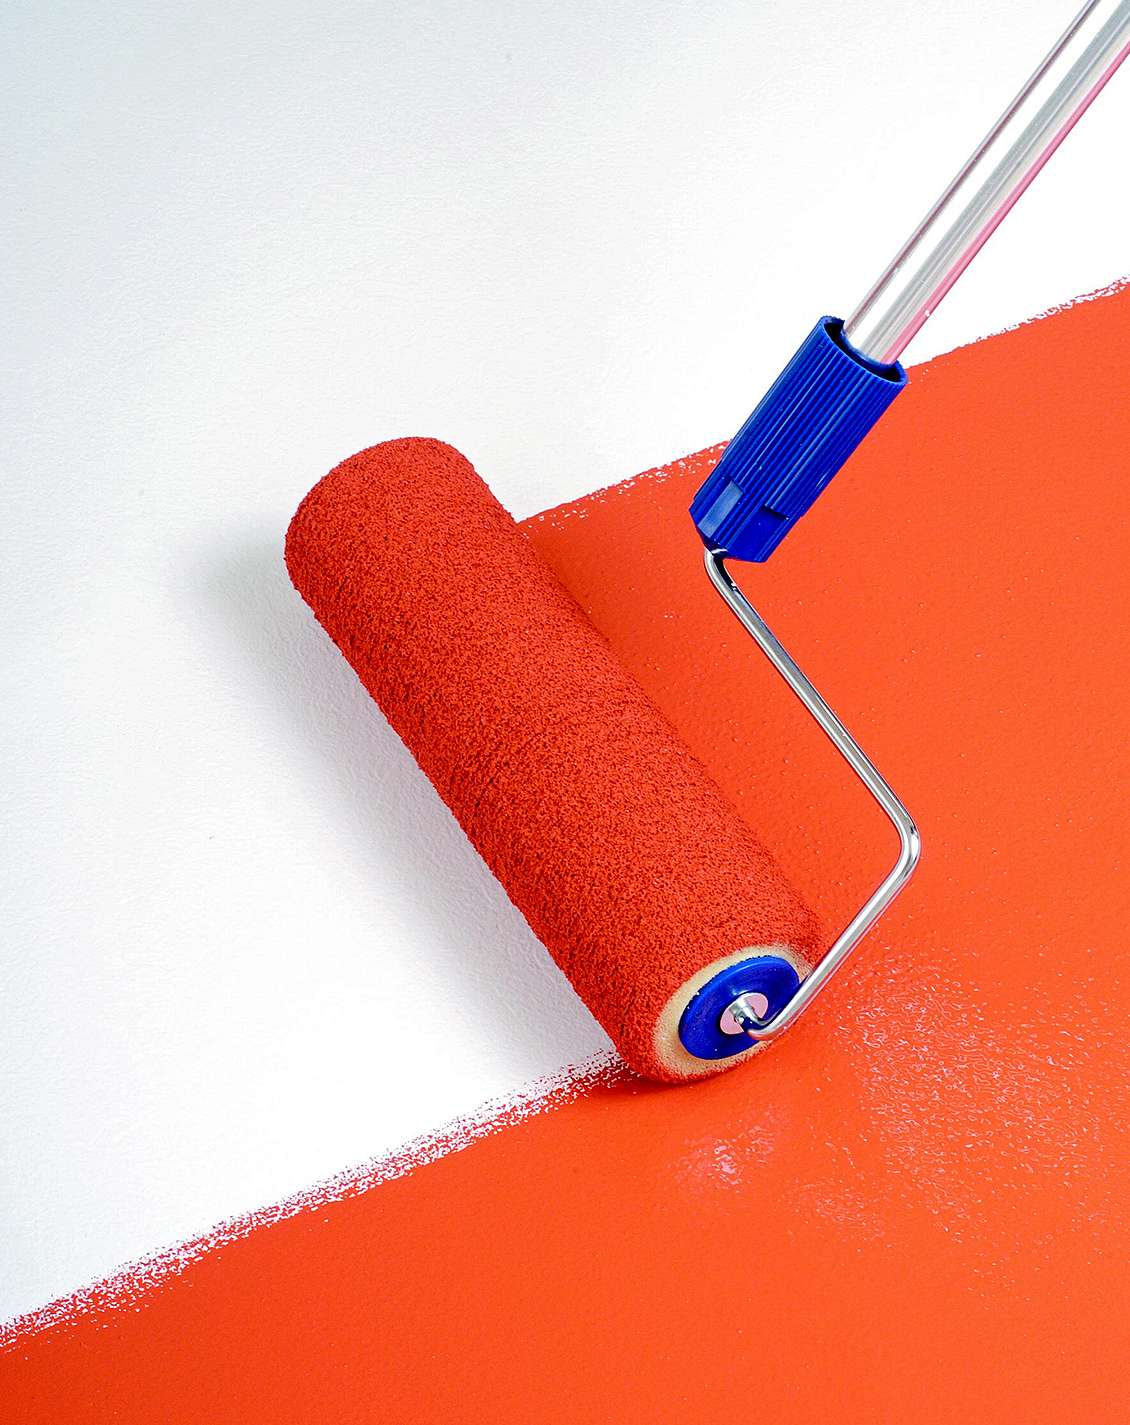 paint vinyl flooring roller floor deglosser makeover quick apply better